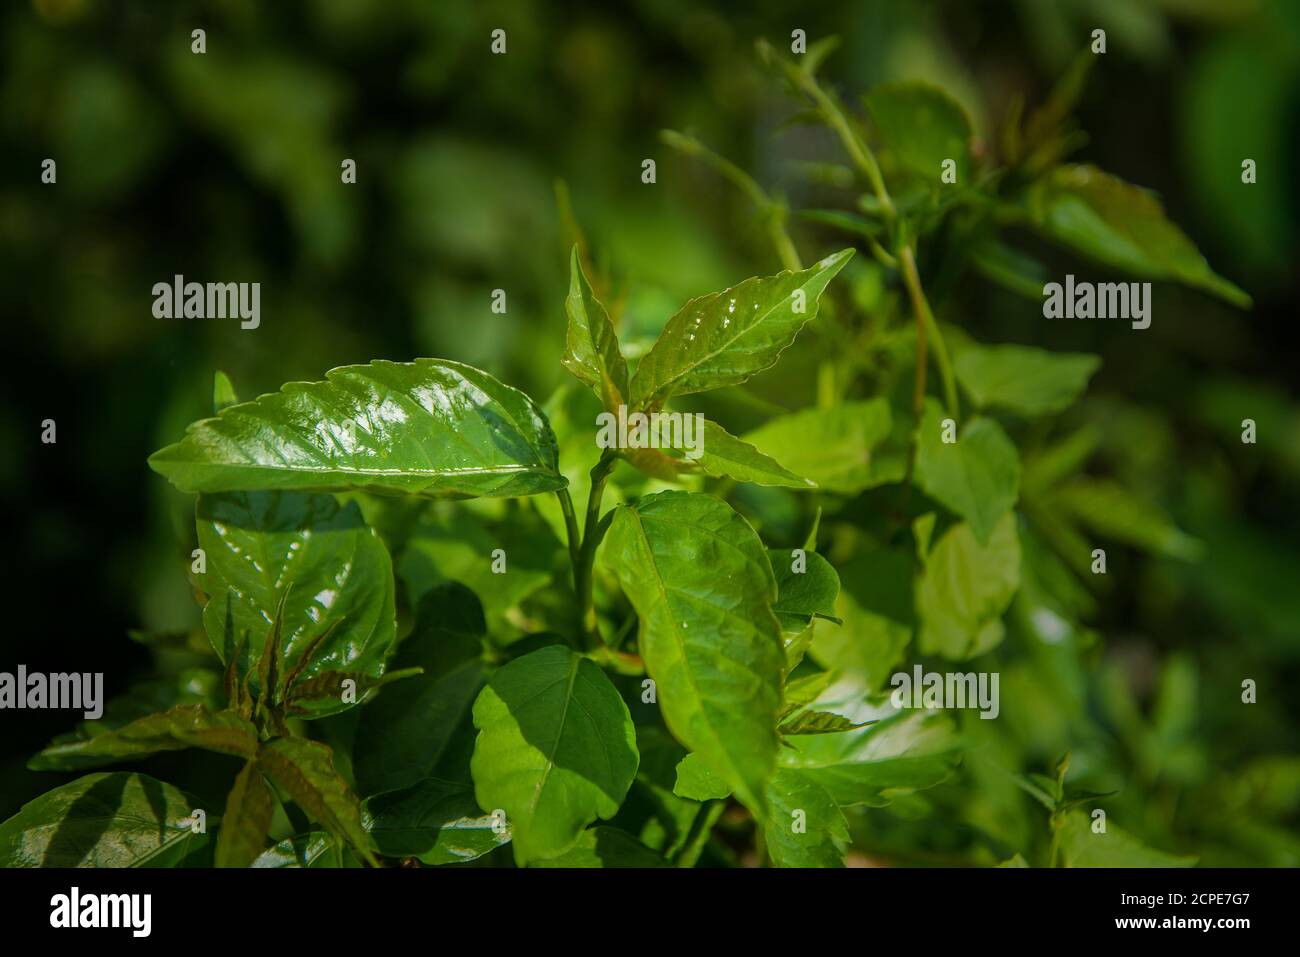 Light and leaves. Bangladesh. Stock Photo